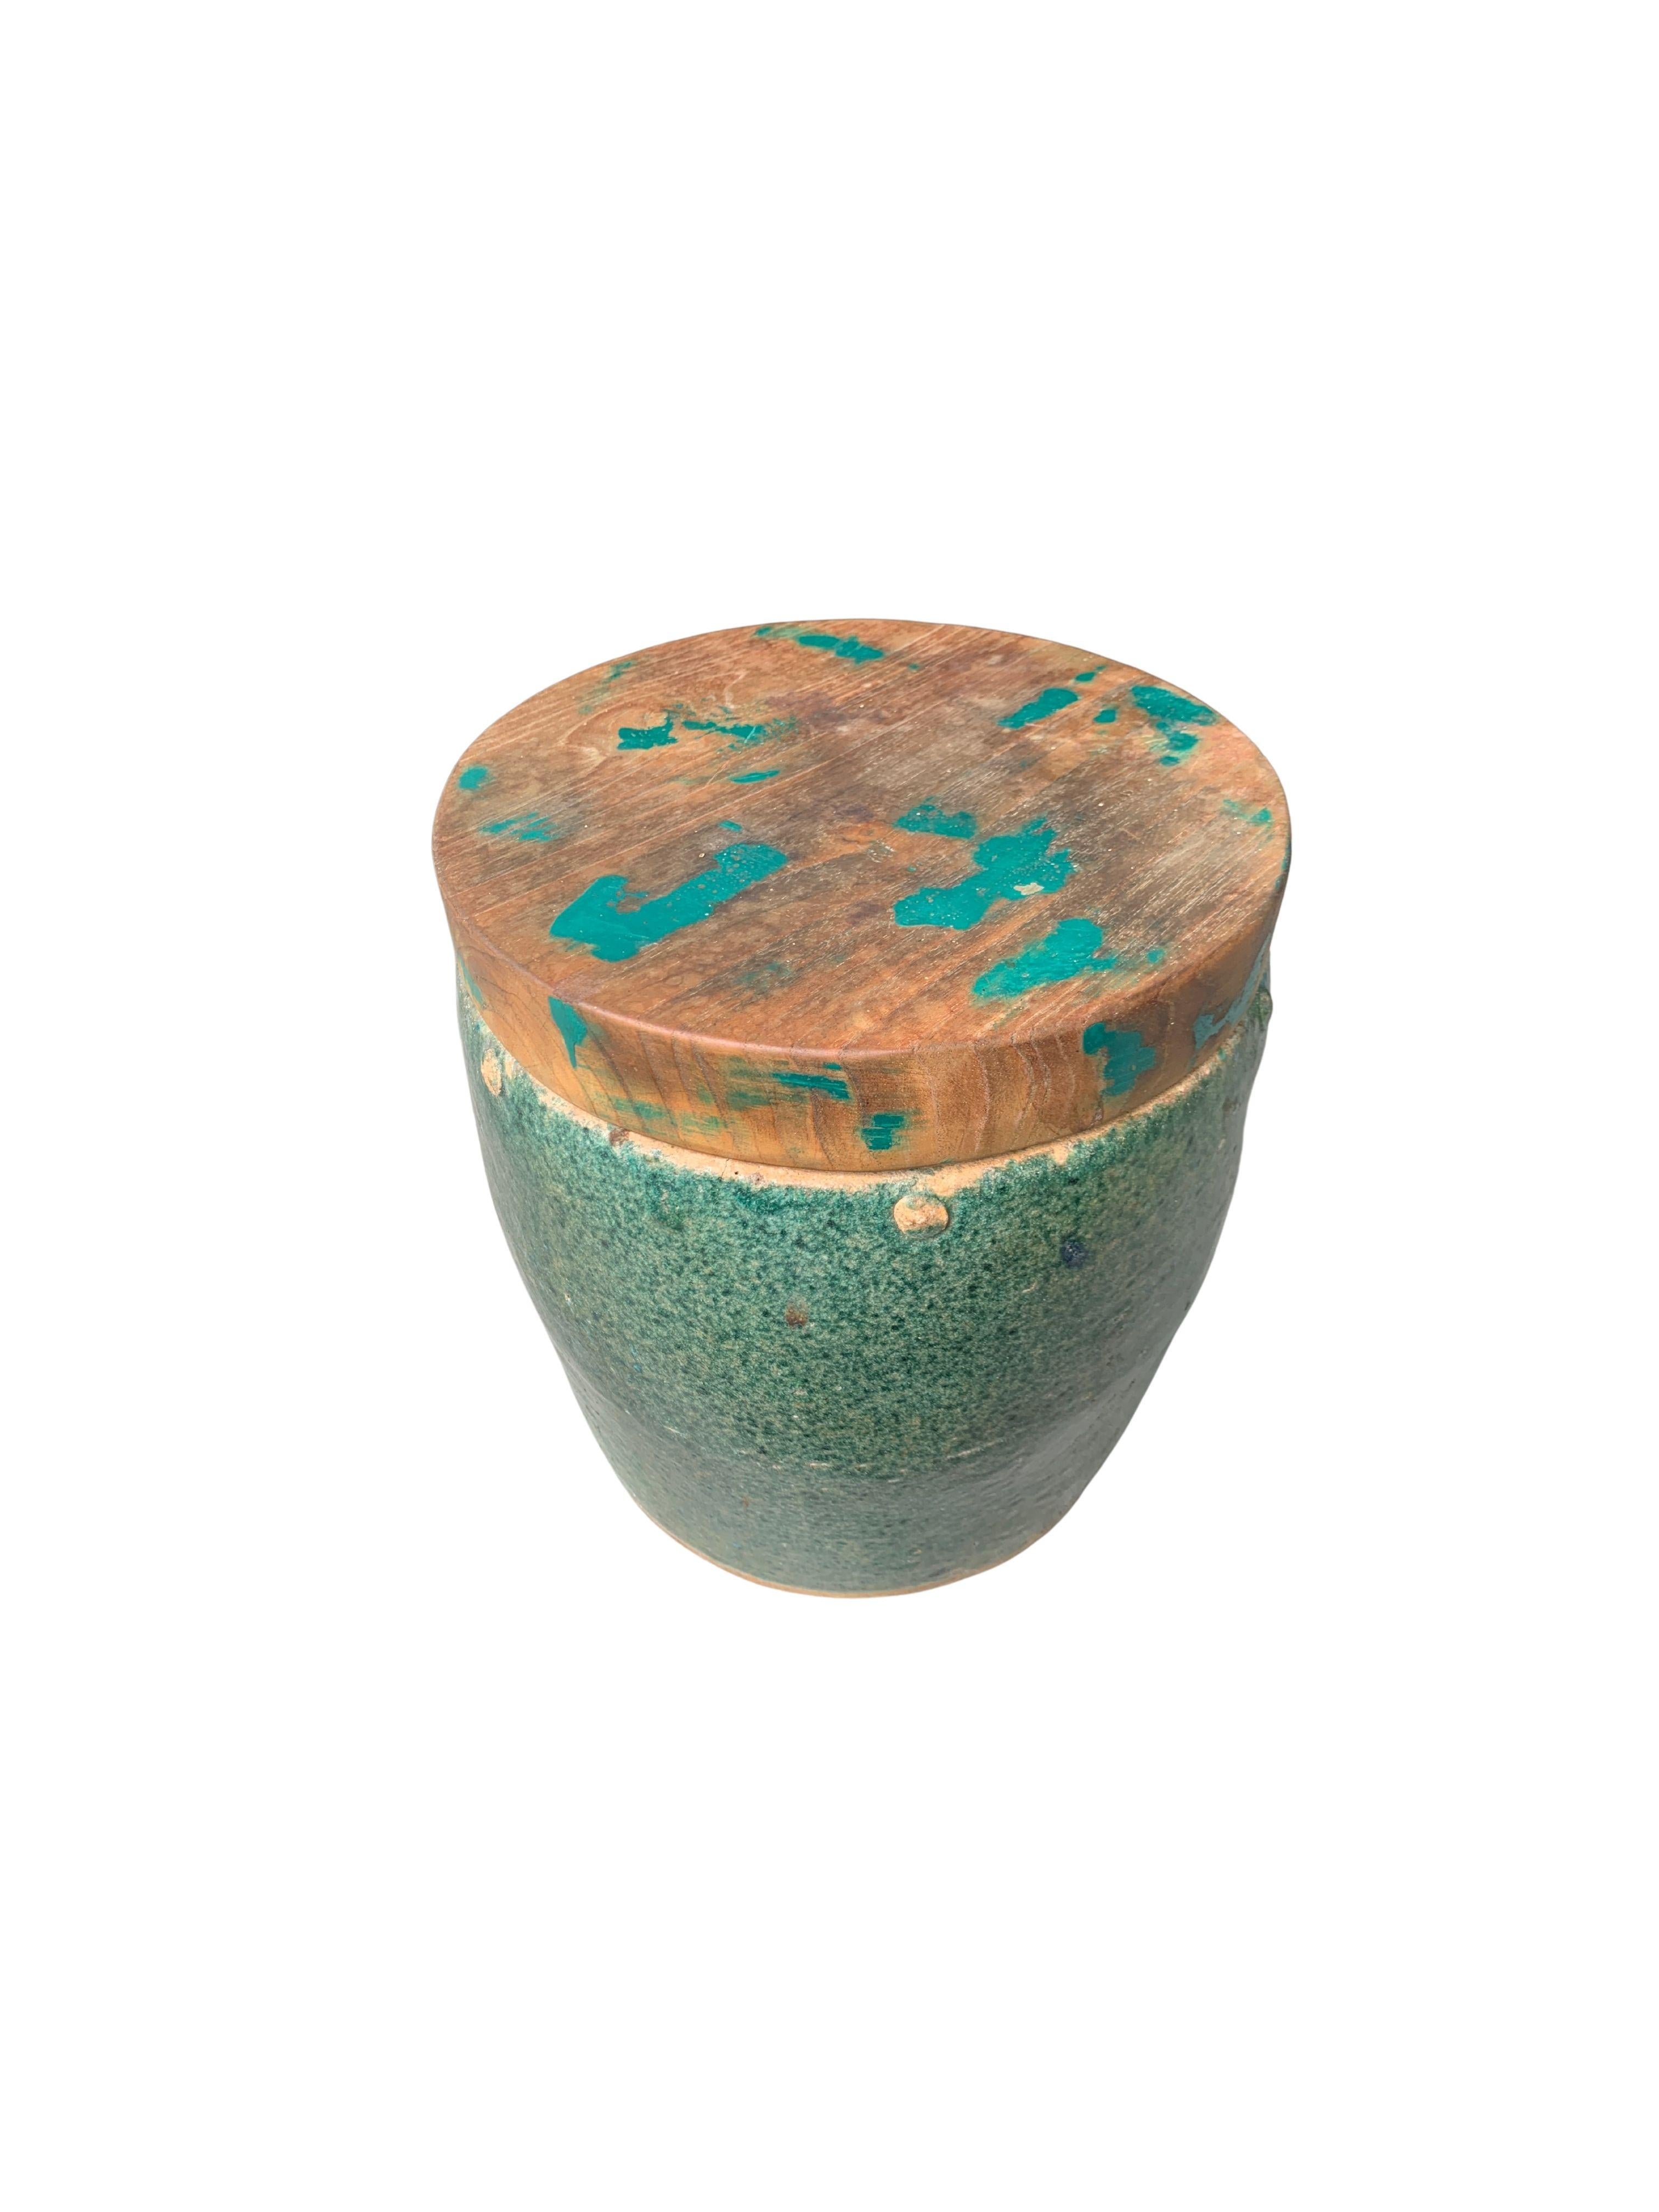 Chinese Shiwan Green Glazed Ceramic Jar / Planter, c. 1900 For Sale 2